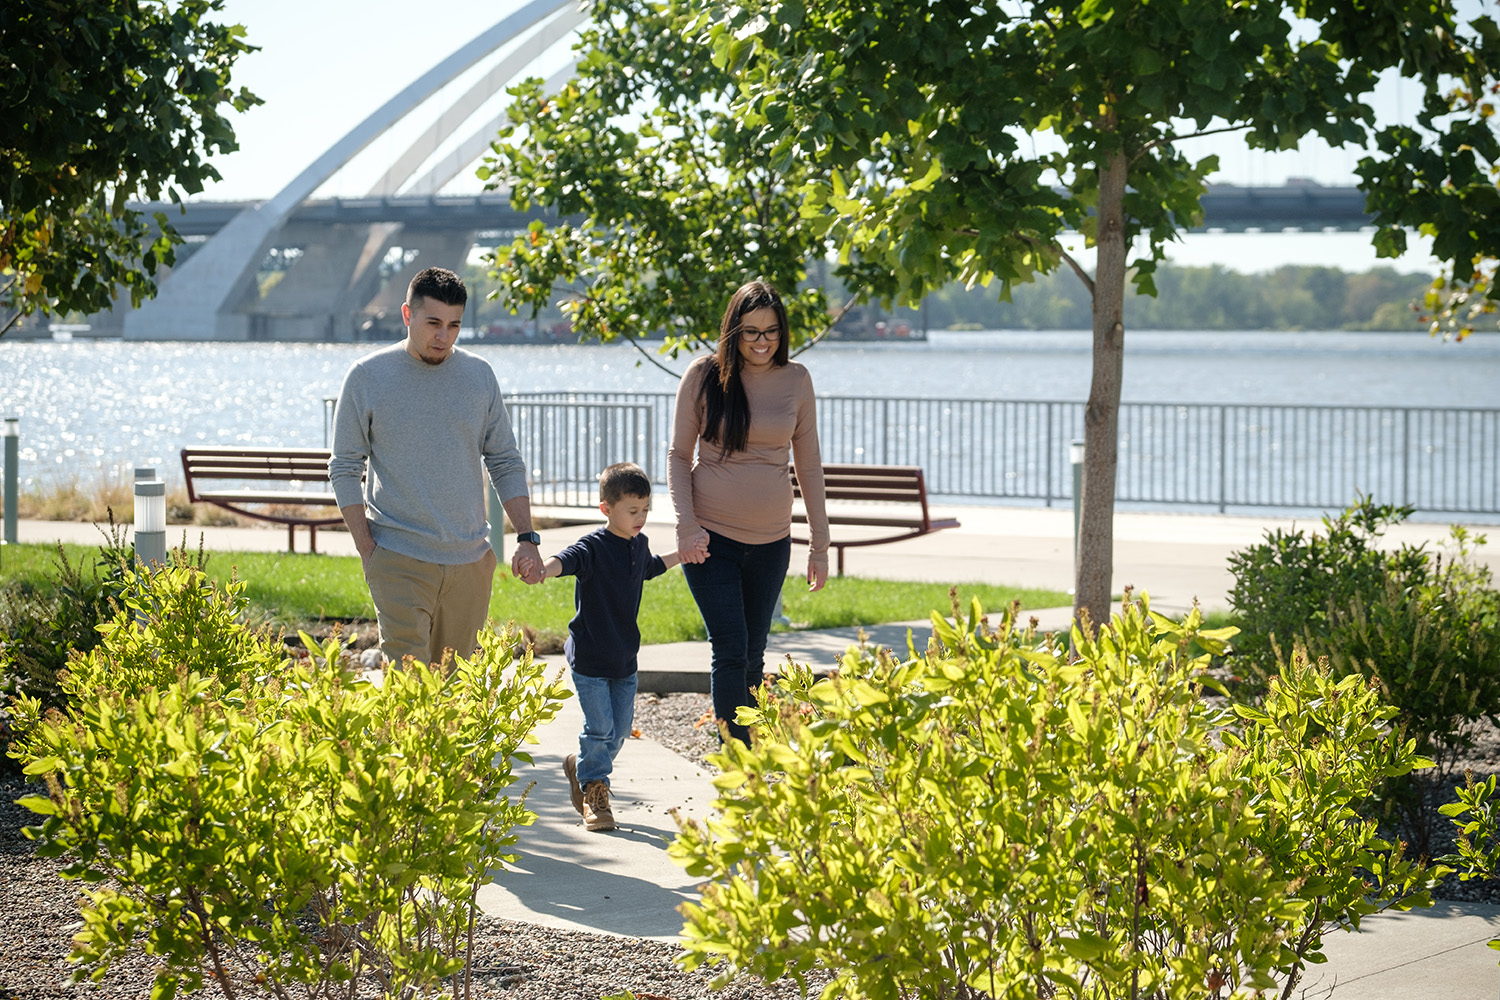 A family walks in a park near a river